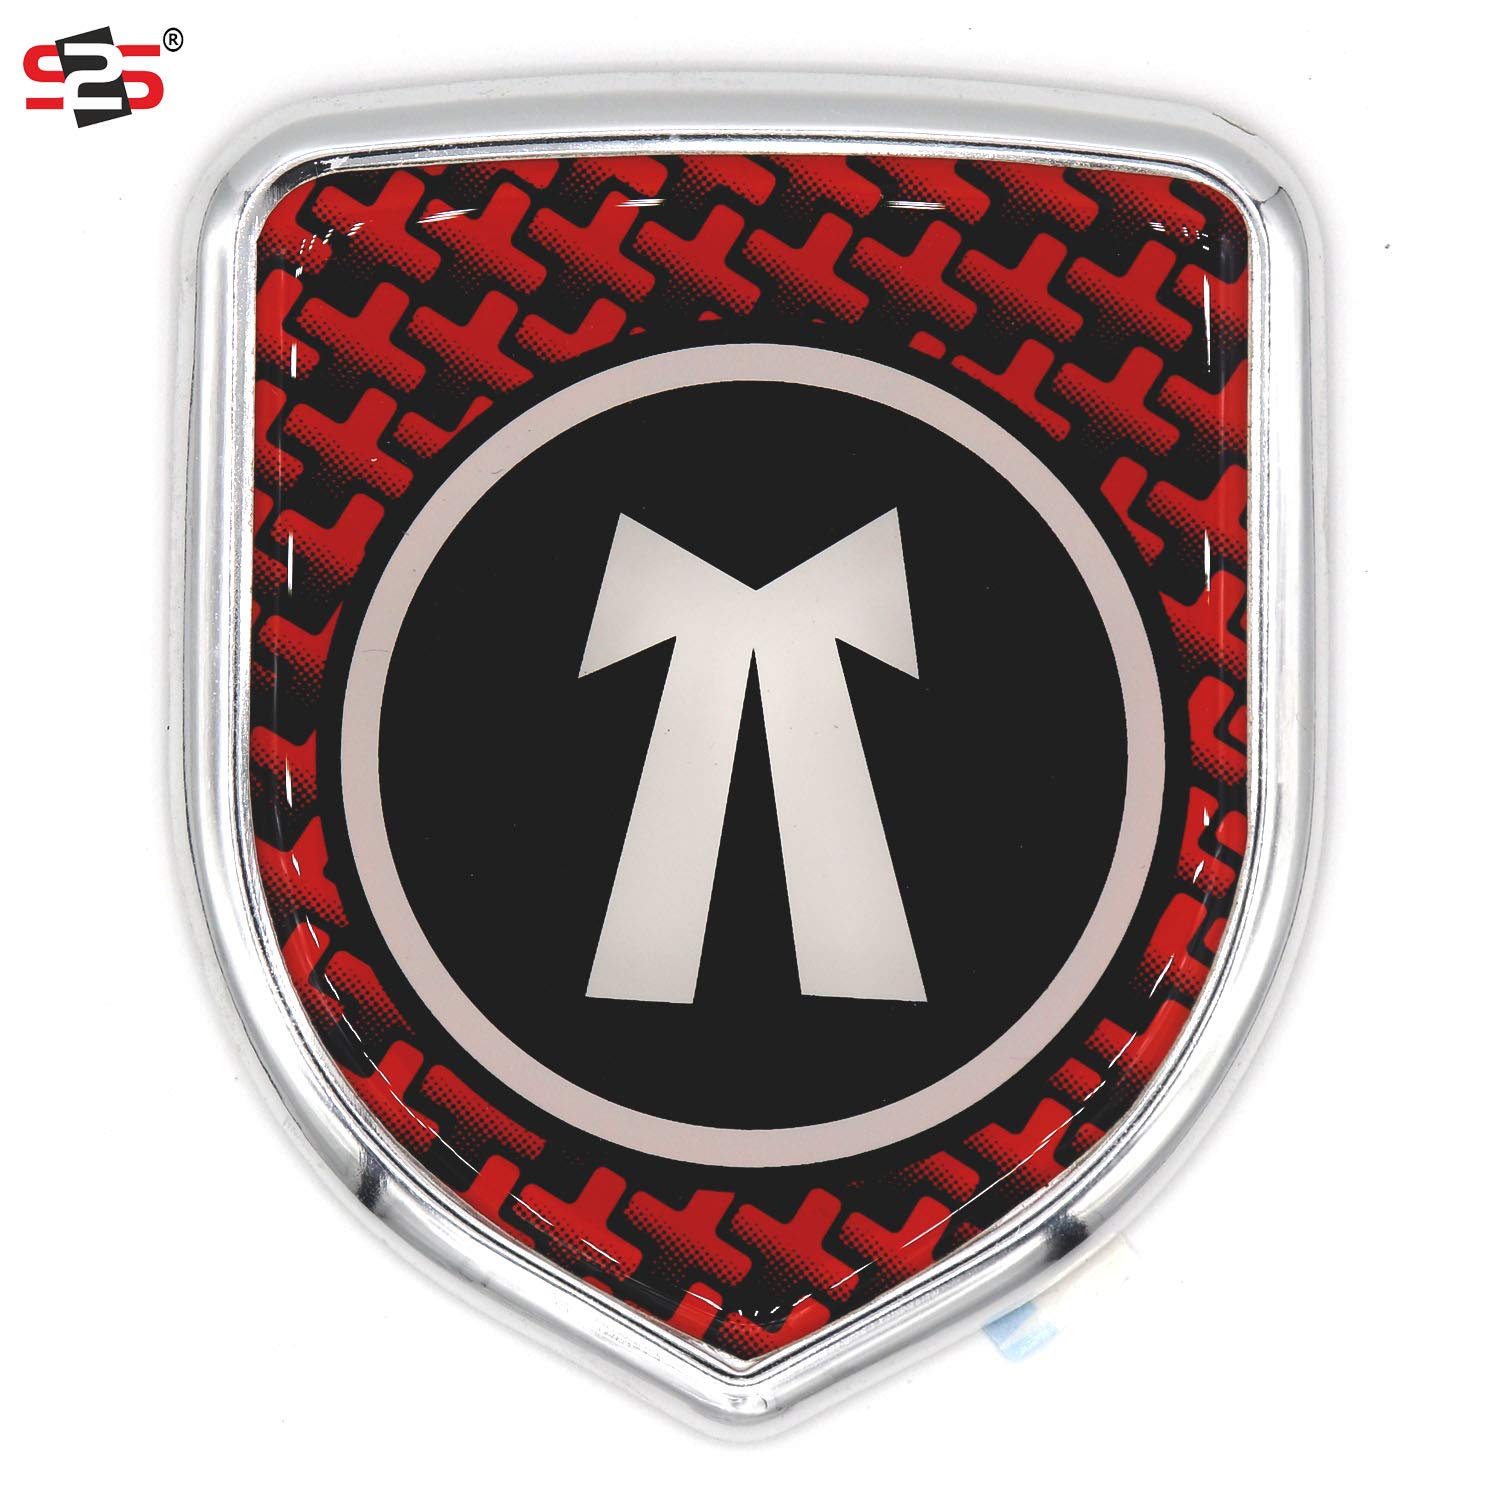 S2S Advocate 3D Metal Chrome Sticker Emblem Badge Logo For Cars & Bikes-Stumbit Bikes and Cars